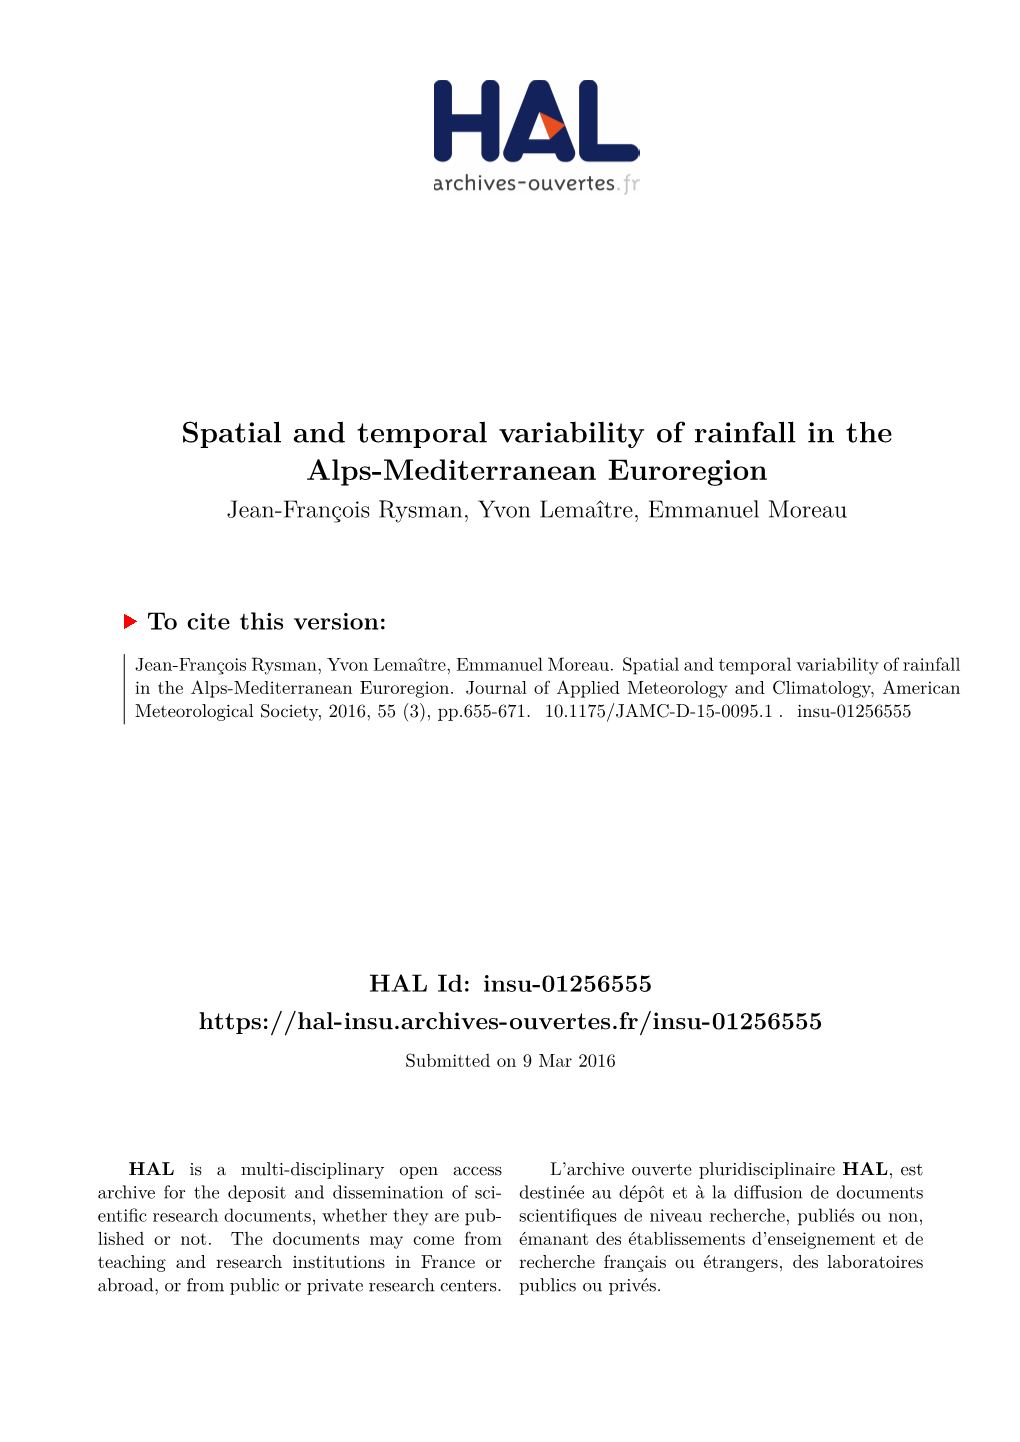 Spatial and Temporal Variability of Rainfall in the Alps-Mediterranean Euroregion Jean-François Rysman, Yvon Lemaître, Emmanuel Moreau